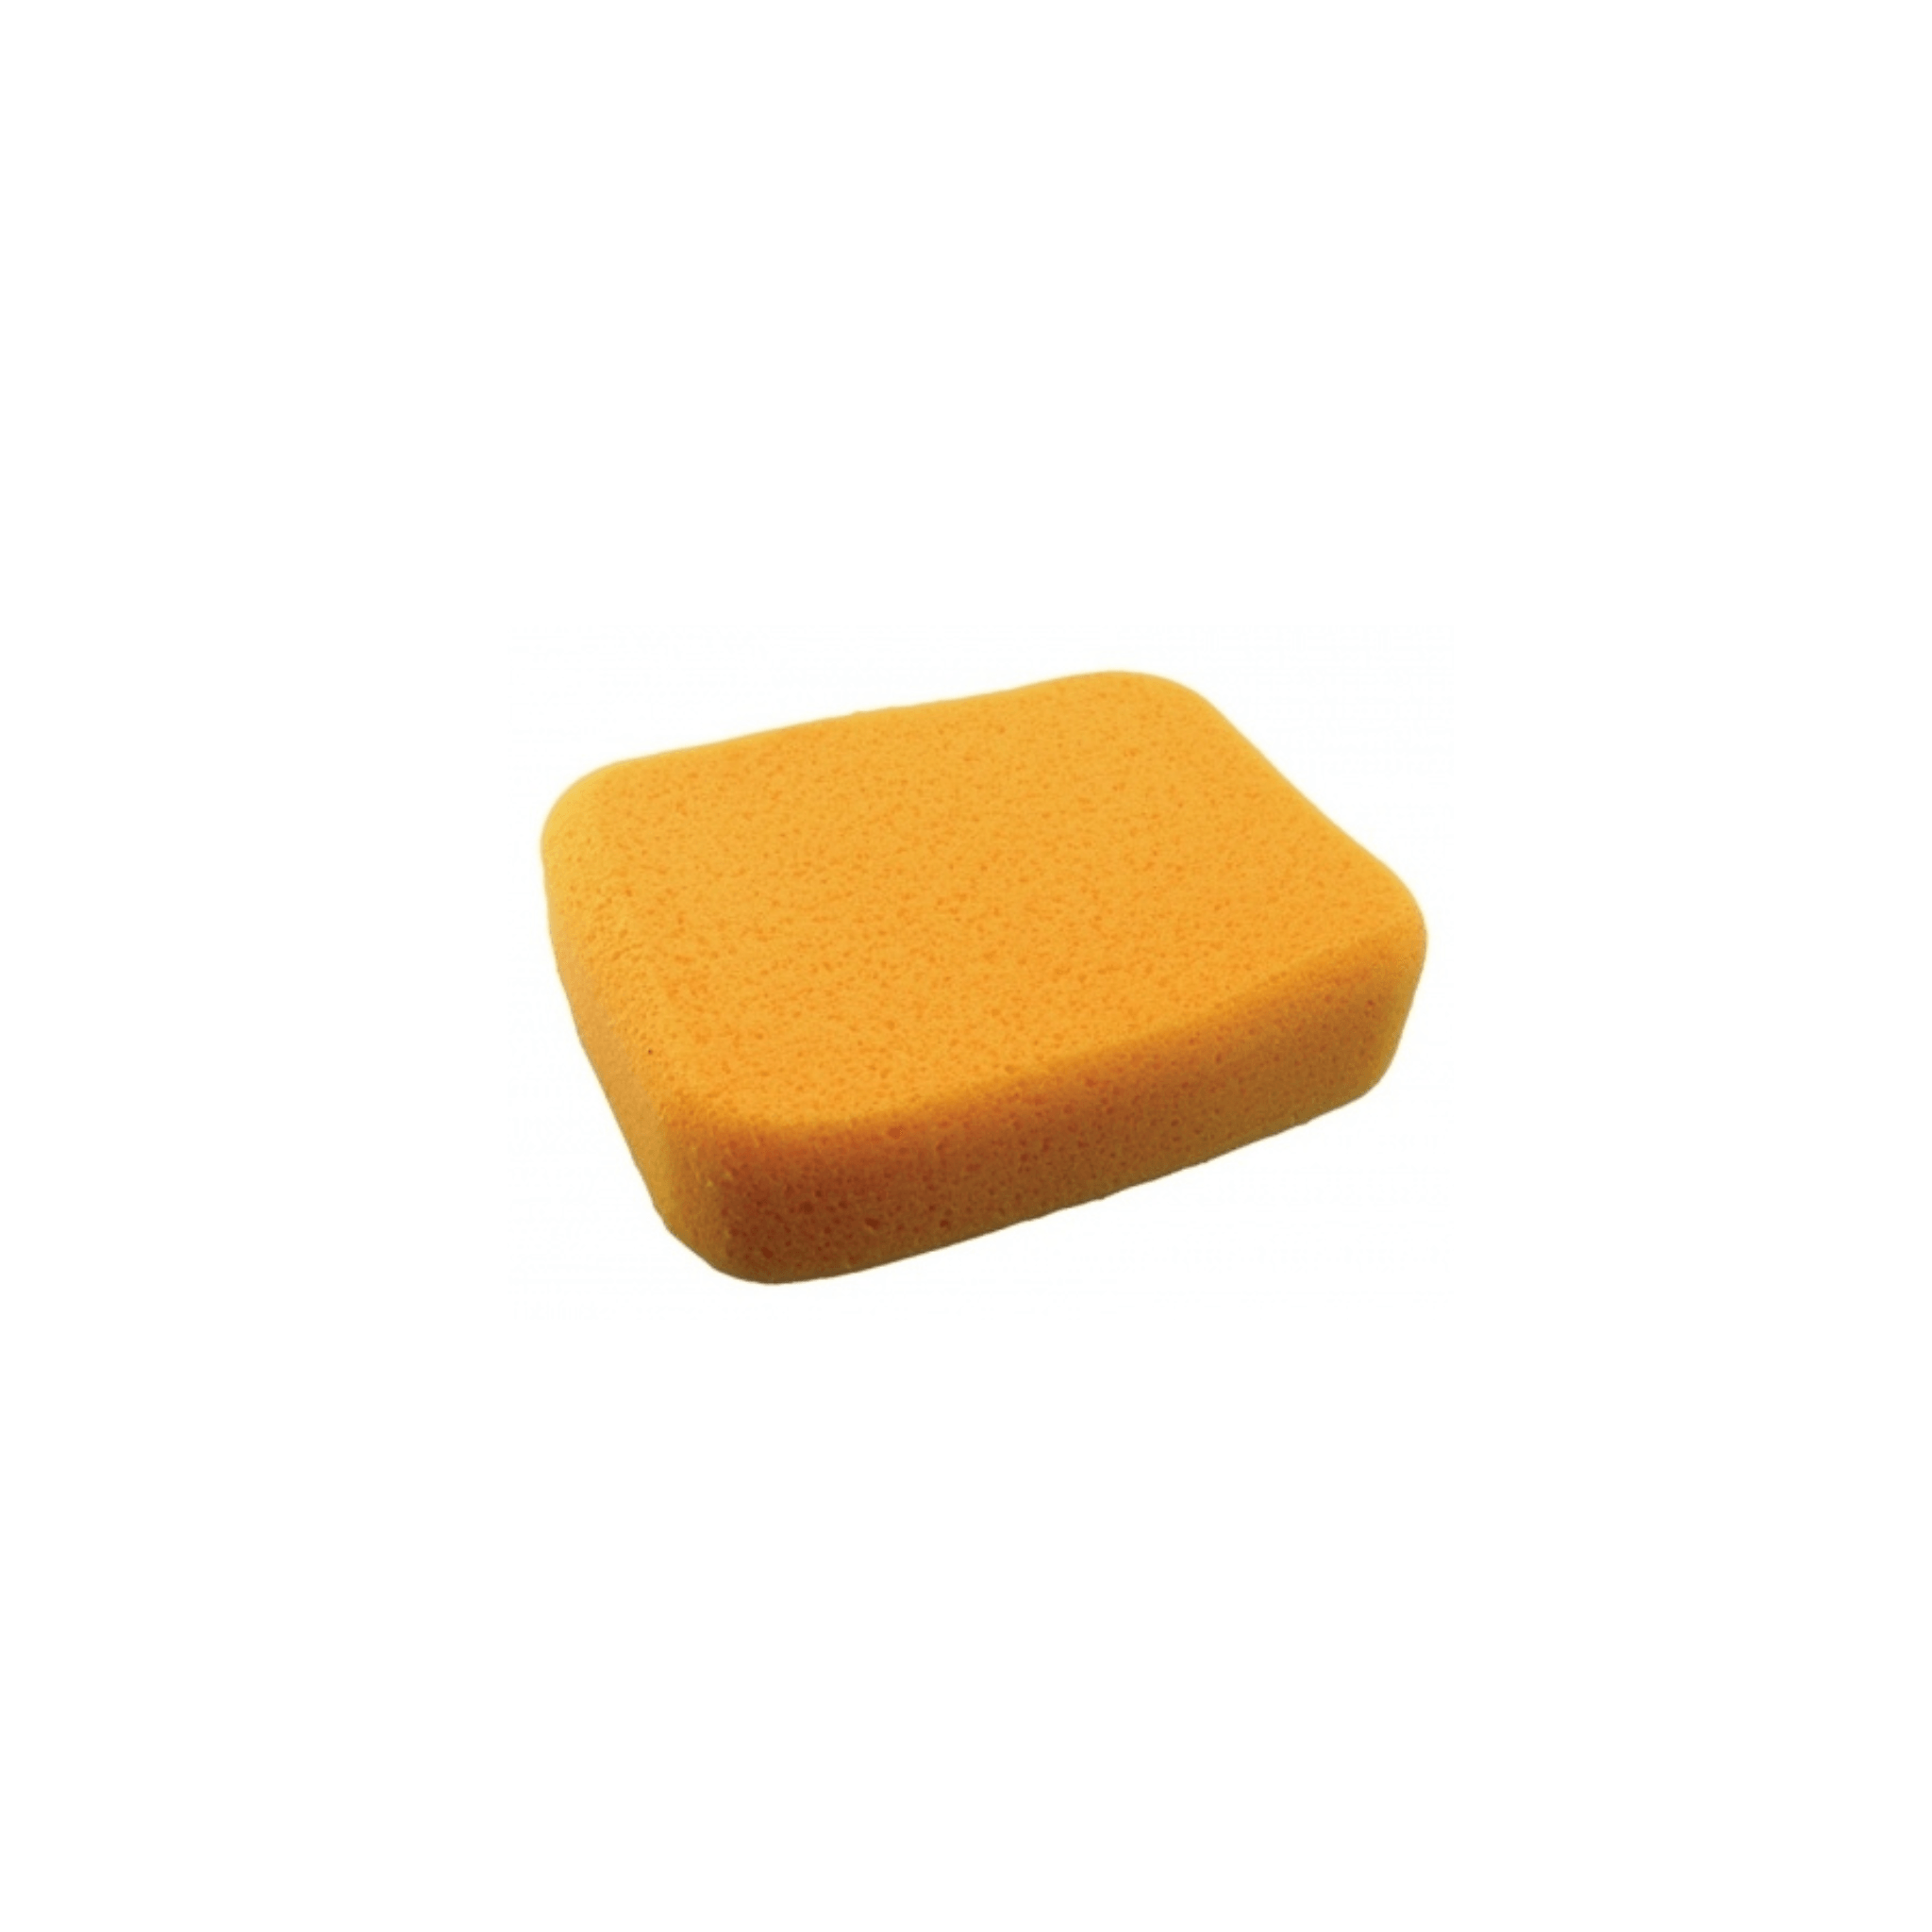 XL Hydro Sponge - Direct Stone Tool Supply, Inc